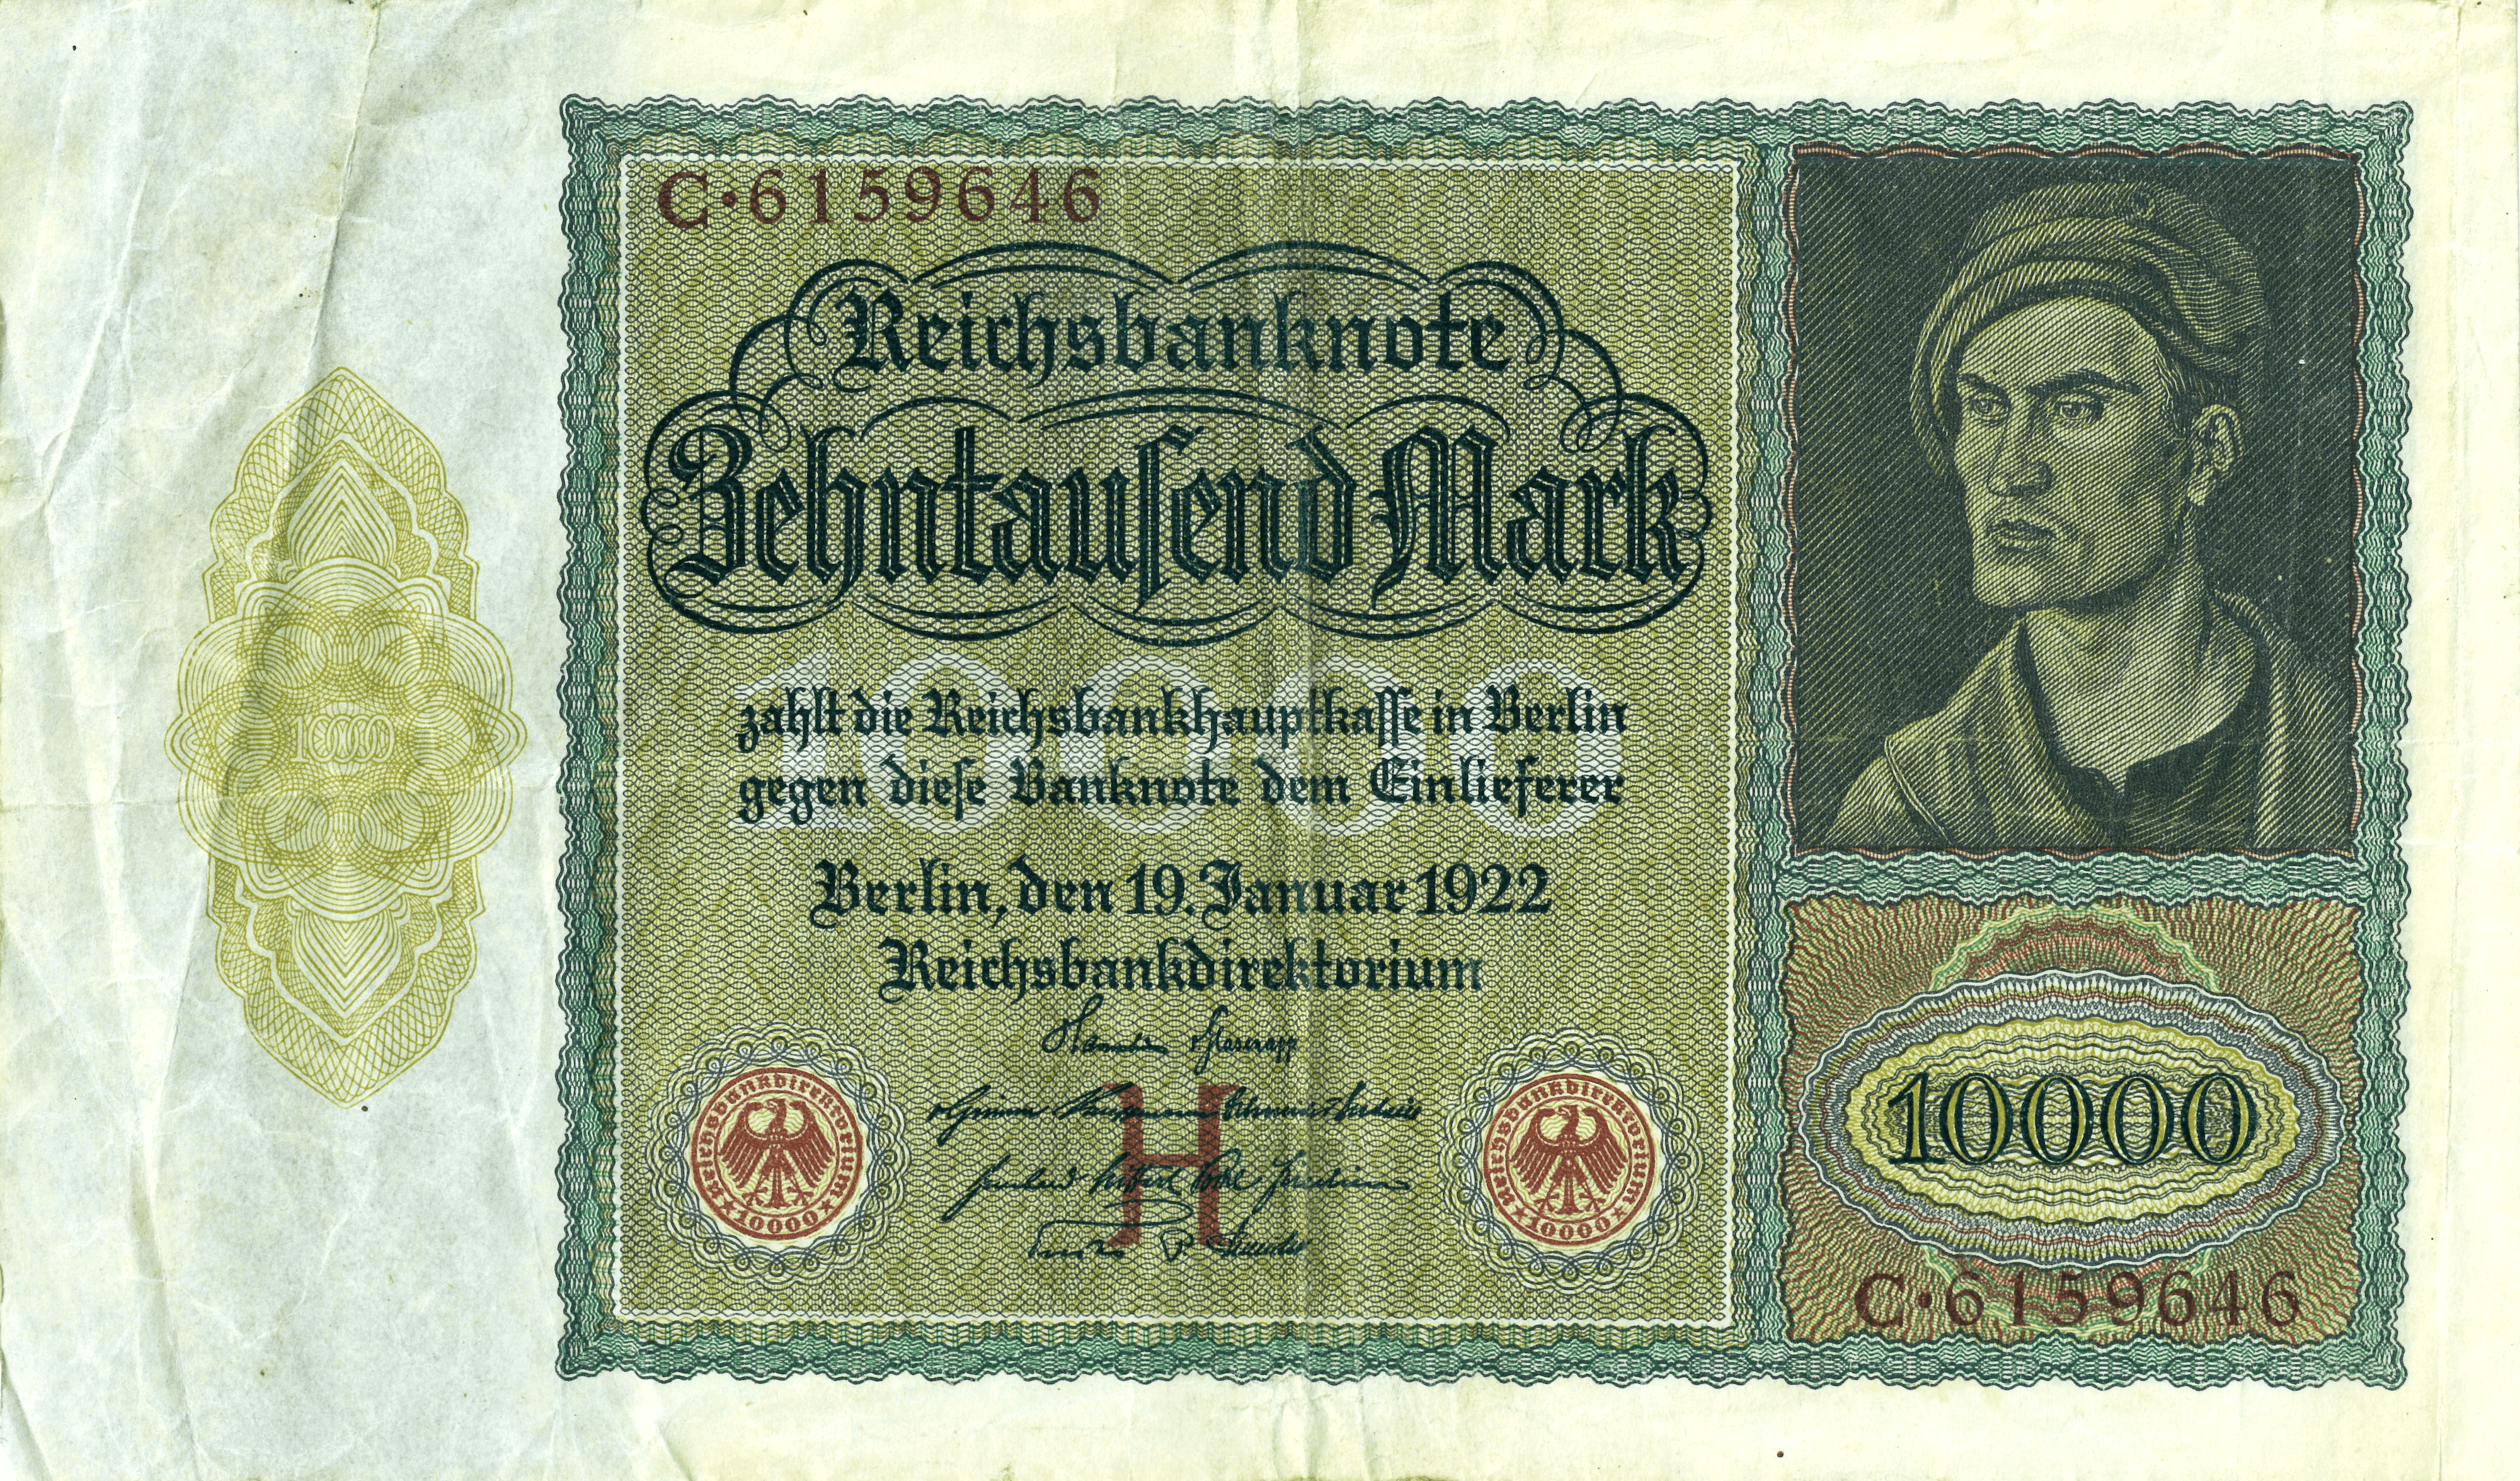 The Reichsbank 10.000 Mark Note I